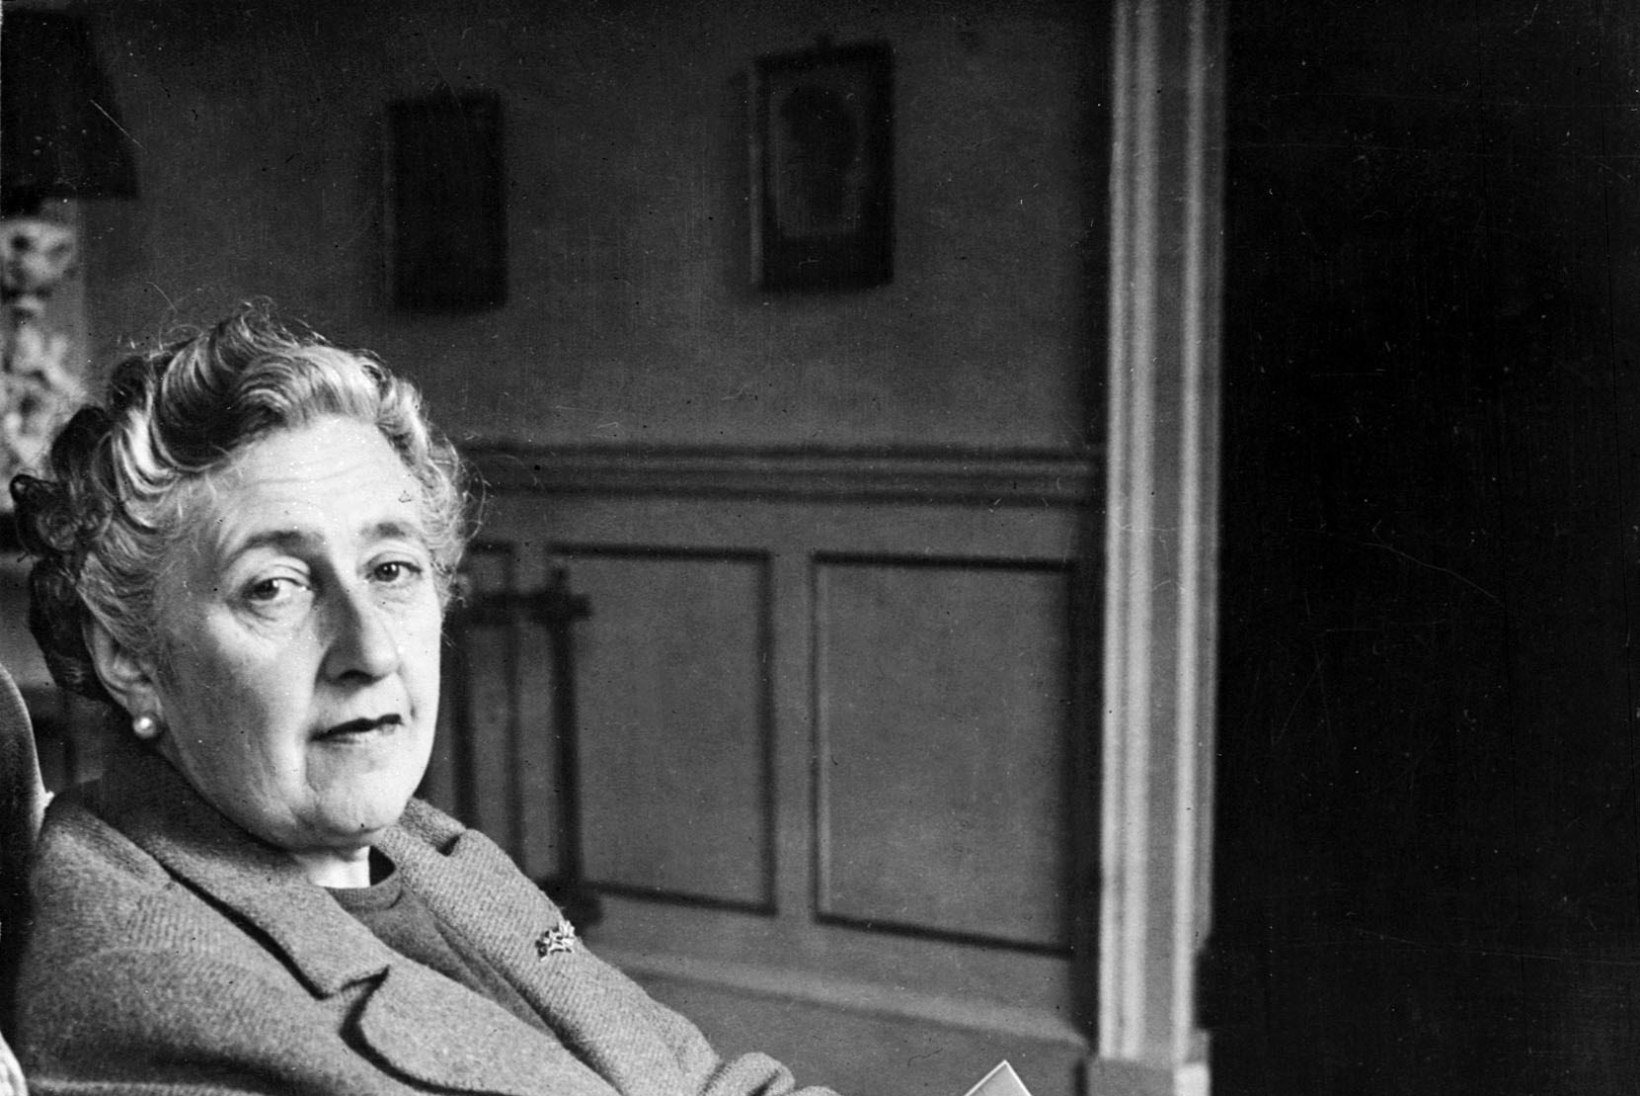 ÕL ARHIIV | A nagu arseen: kuidas Agatha Christie’st sai mürgiekspert